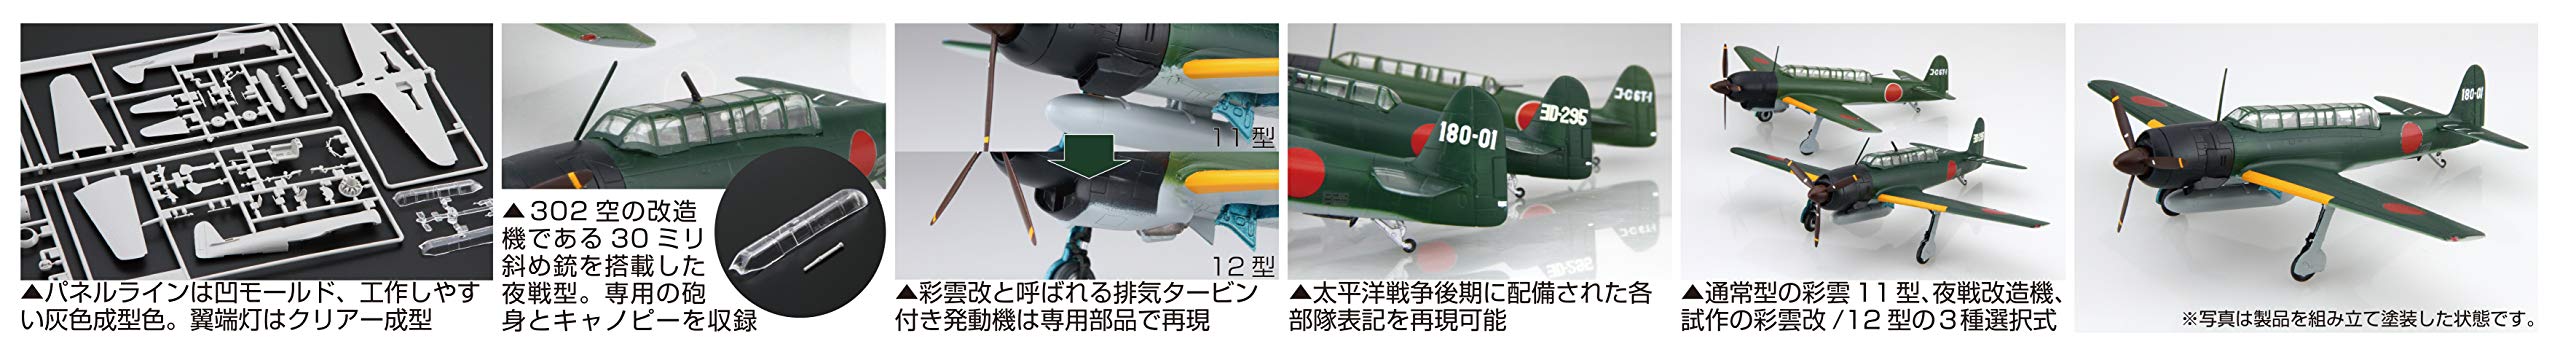 Fujimi Modèle 1/72 C Series No.37 Nakajima Reconnaissance Aircraft Saiun (Type 11/Type 11 Night Battle)/Saiun Kai C37